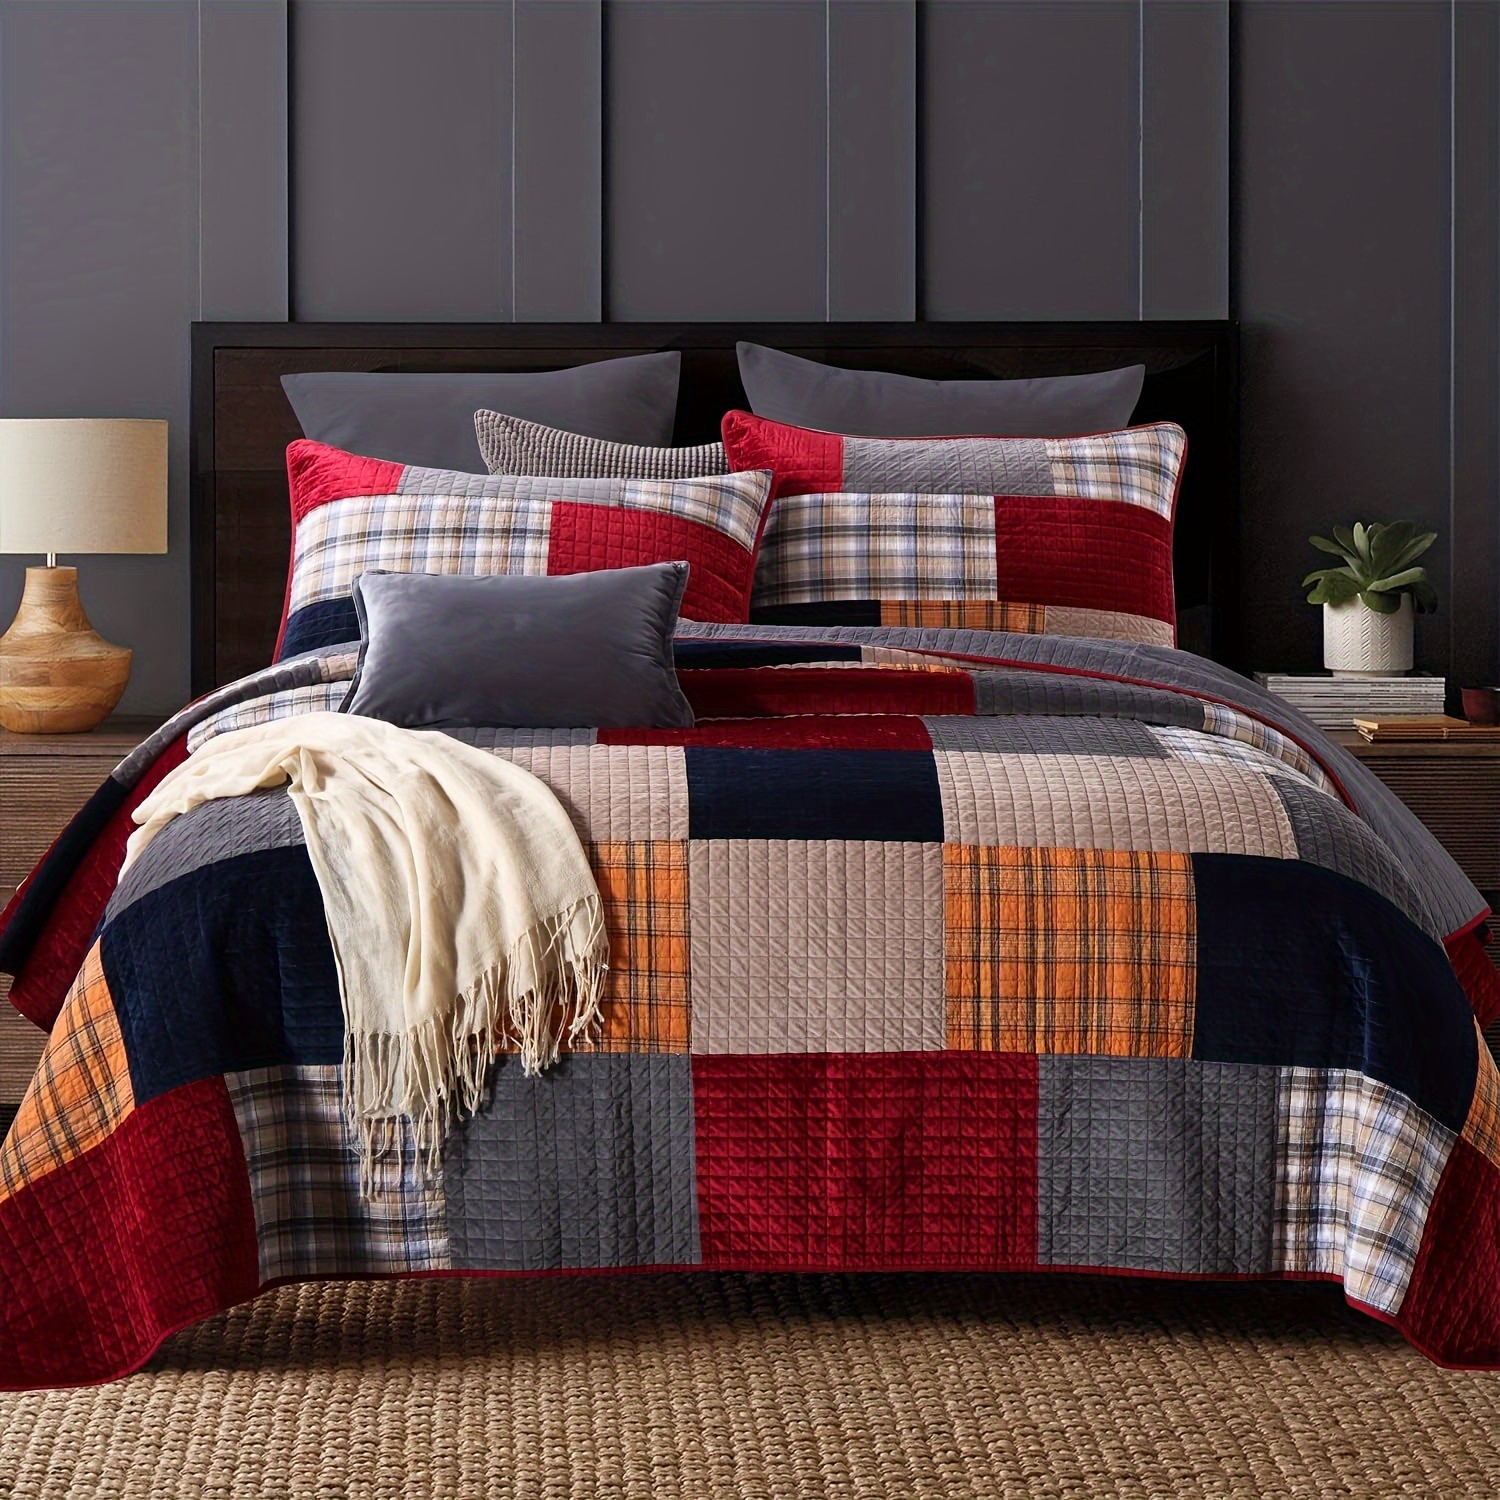 

Secgo Velvet Queen&king Comforter Set For Bed - 100% Cotton Quilts Queen Size, Red, Black Bedspreads With 2 Pillow Shams, Patchwork Reversible Lightweight Beddingqueen&king